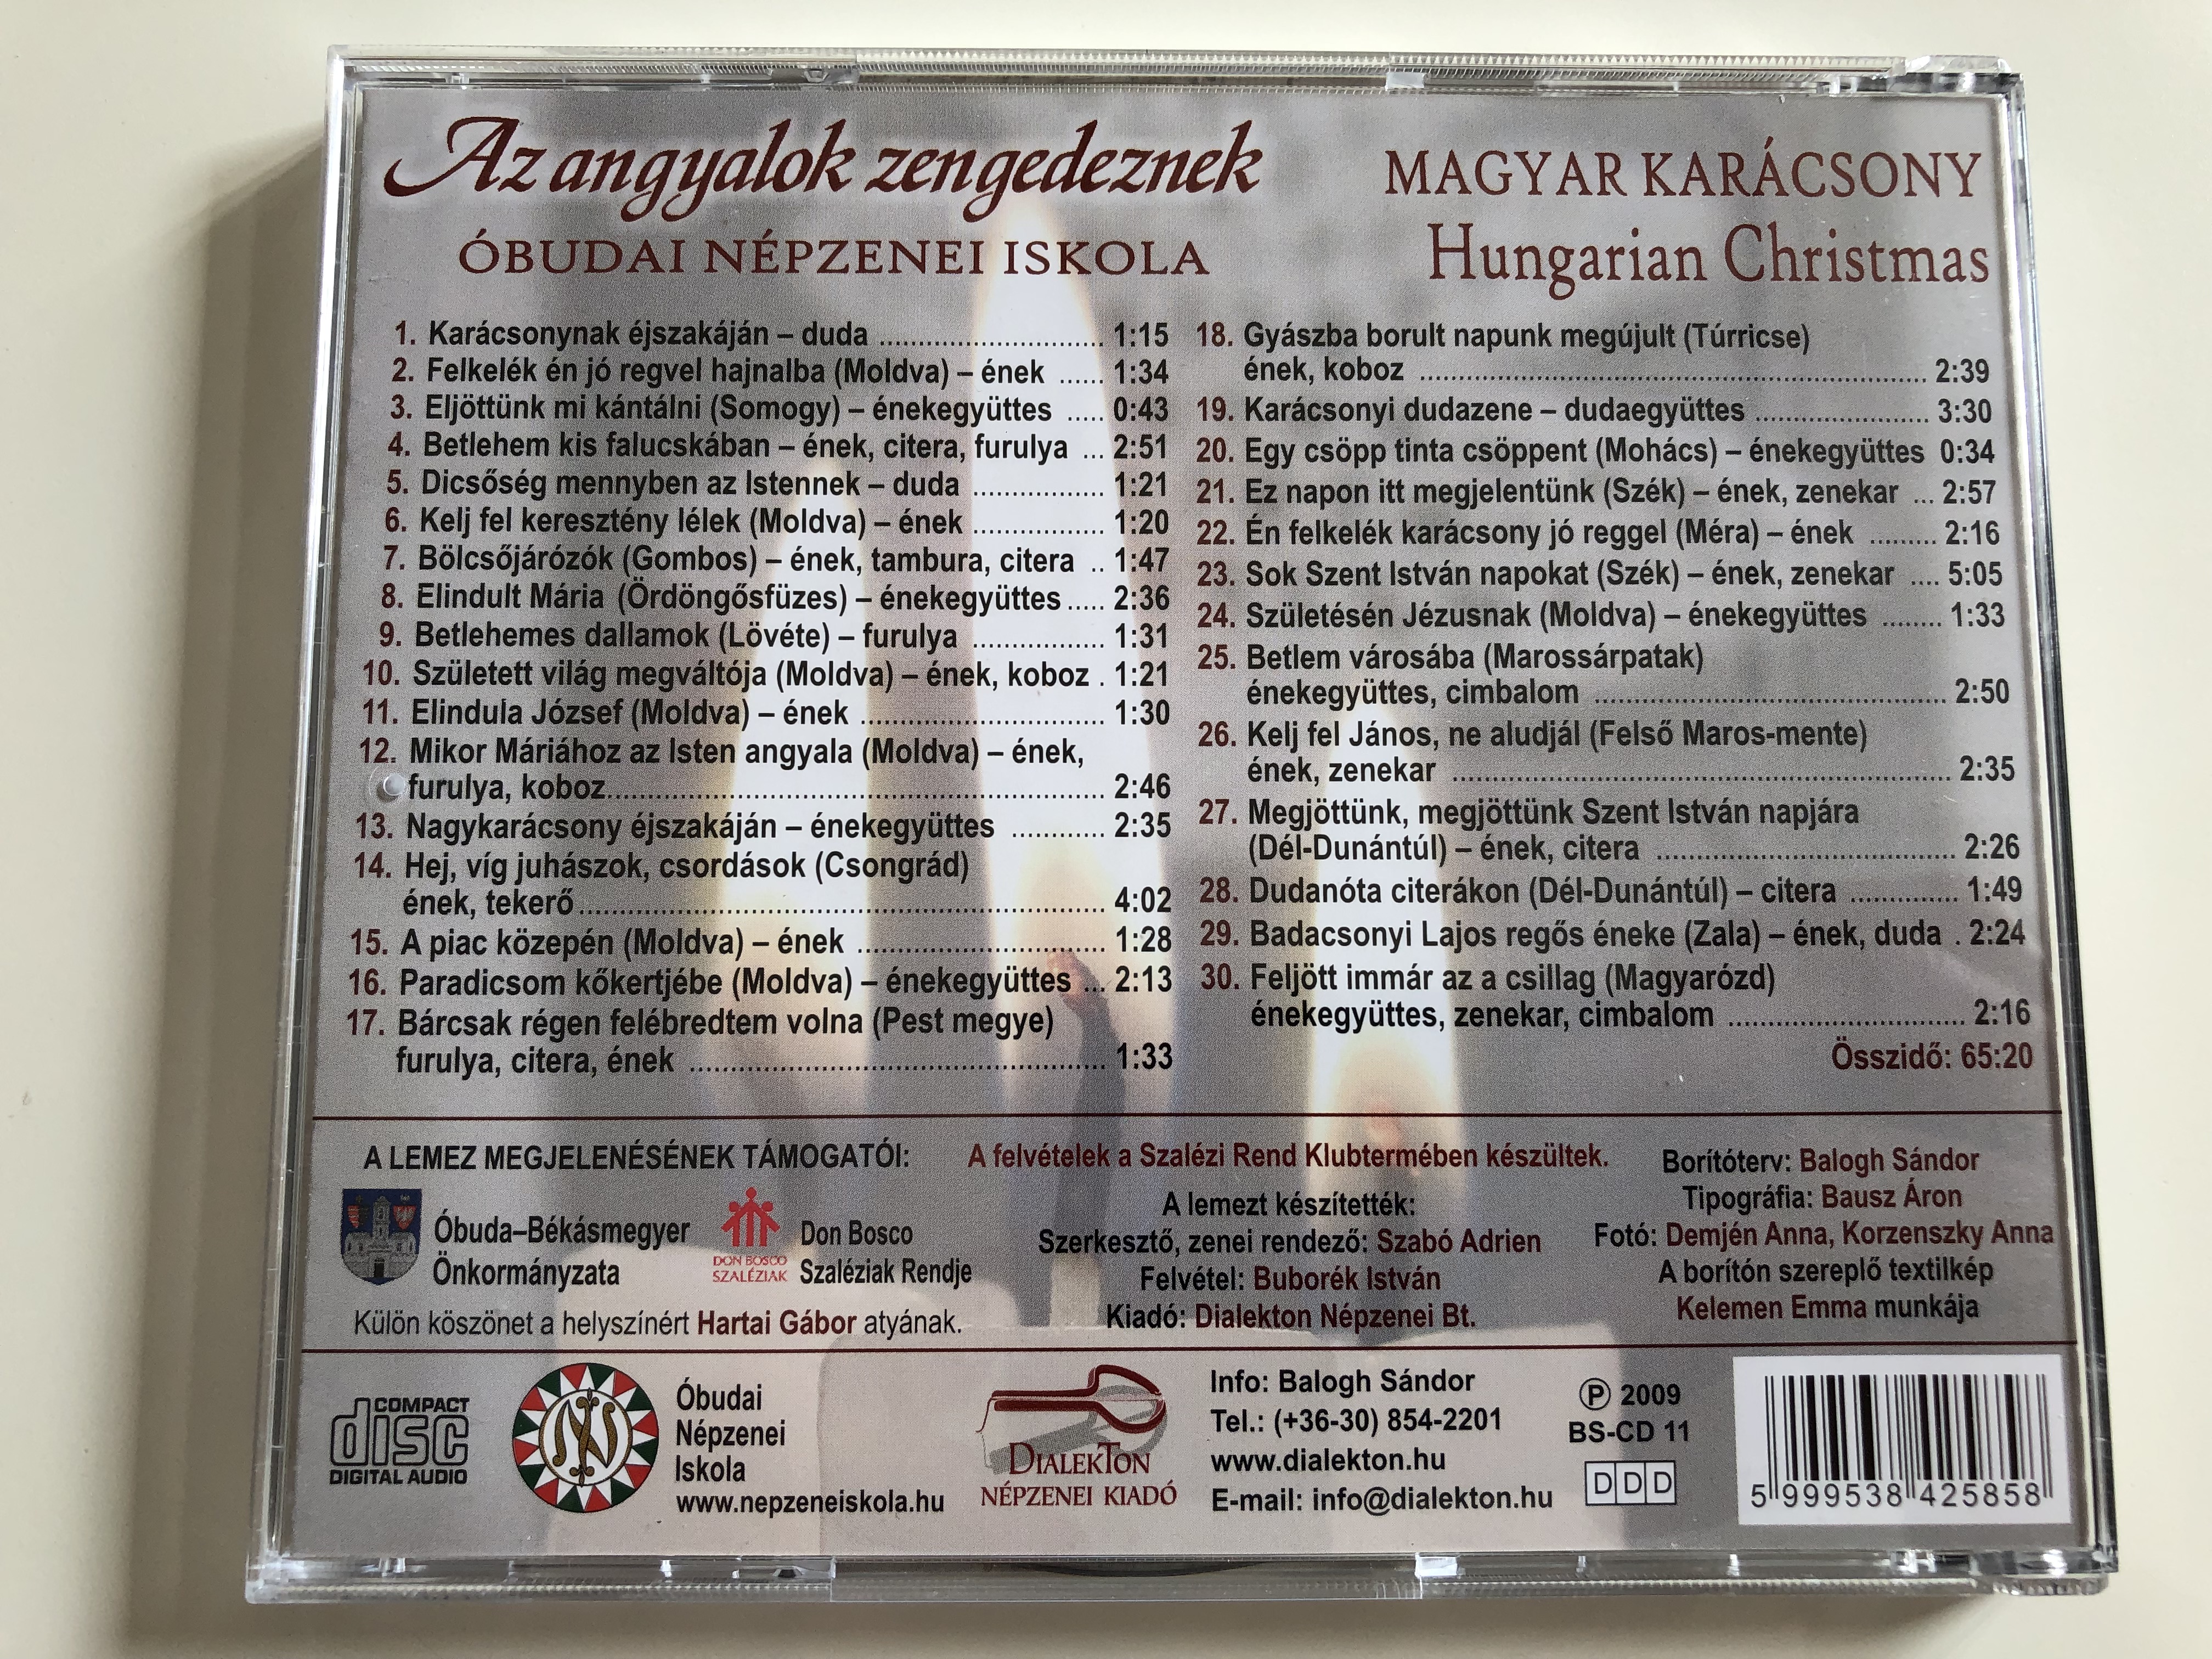 magyar-kar-csony-az-angyalok-zengedeznek-budai-n-pzenei-iskola-hungarian-christmas-songs-angels-are-singing-audio-cd-2009-dialekton-bs-cd11-7-.jpg